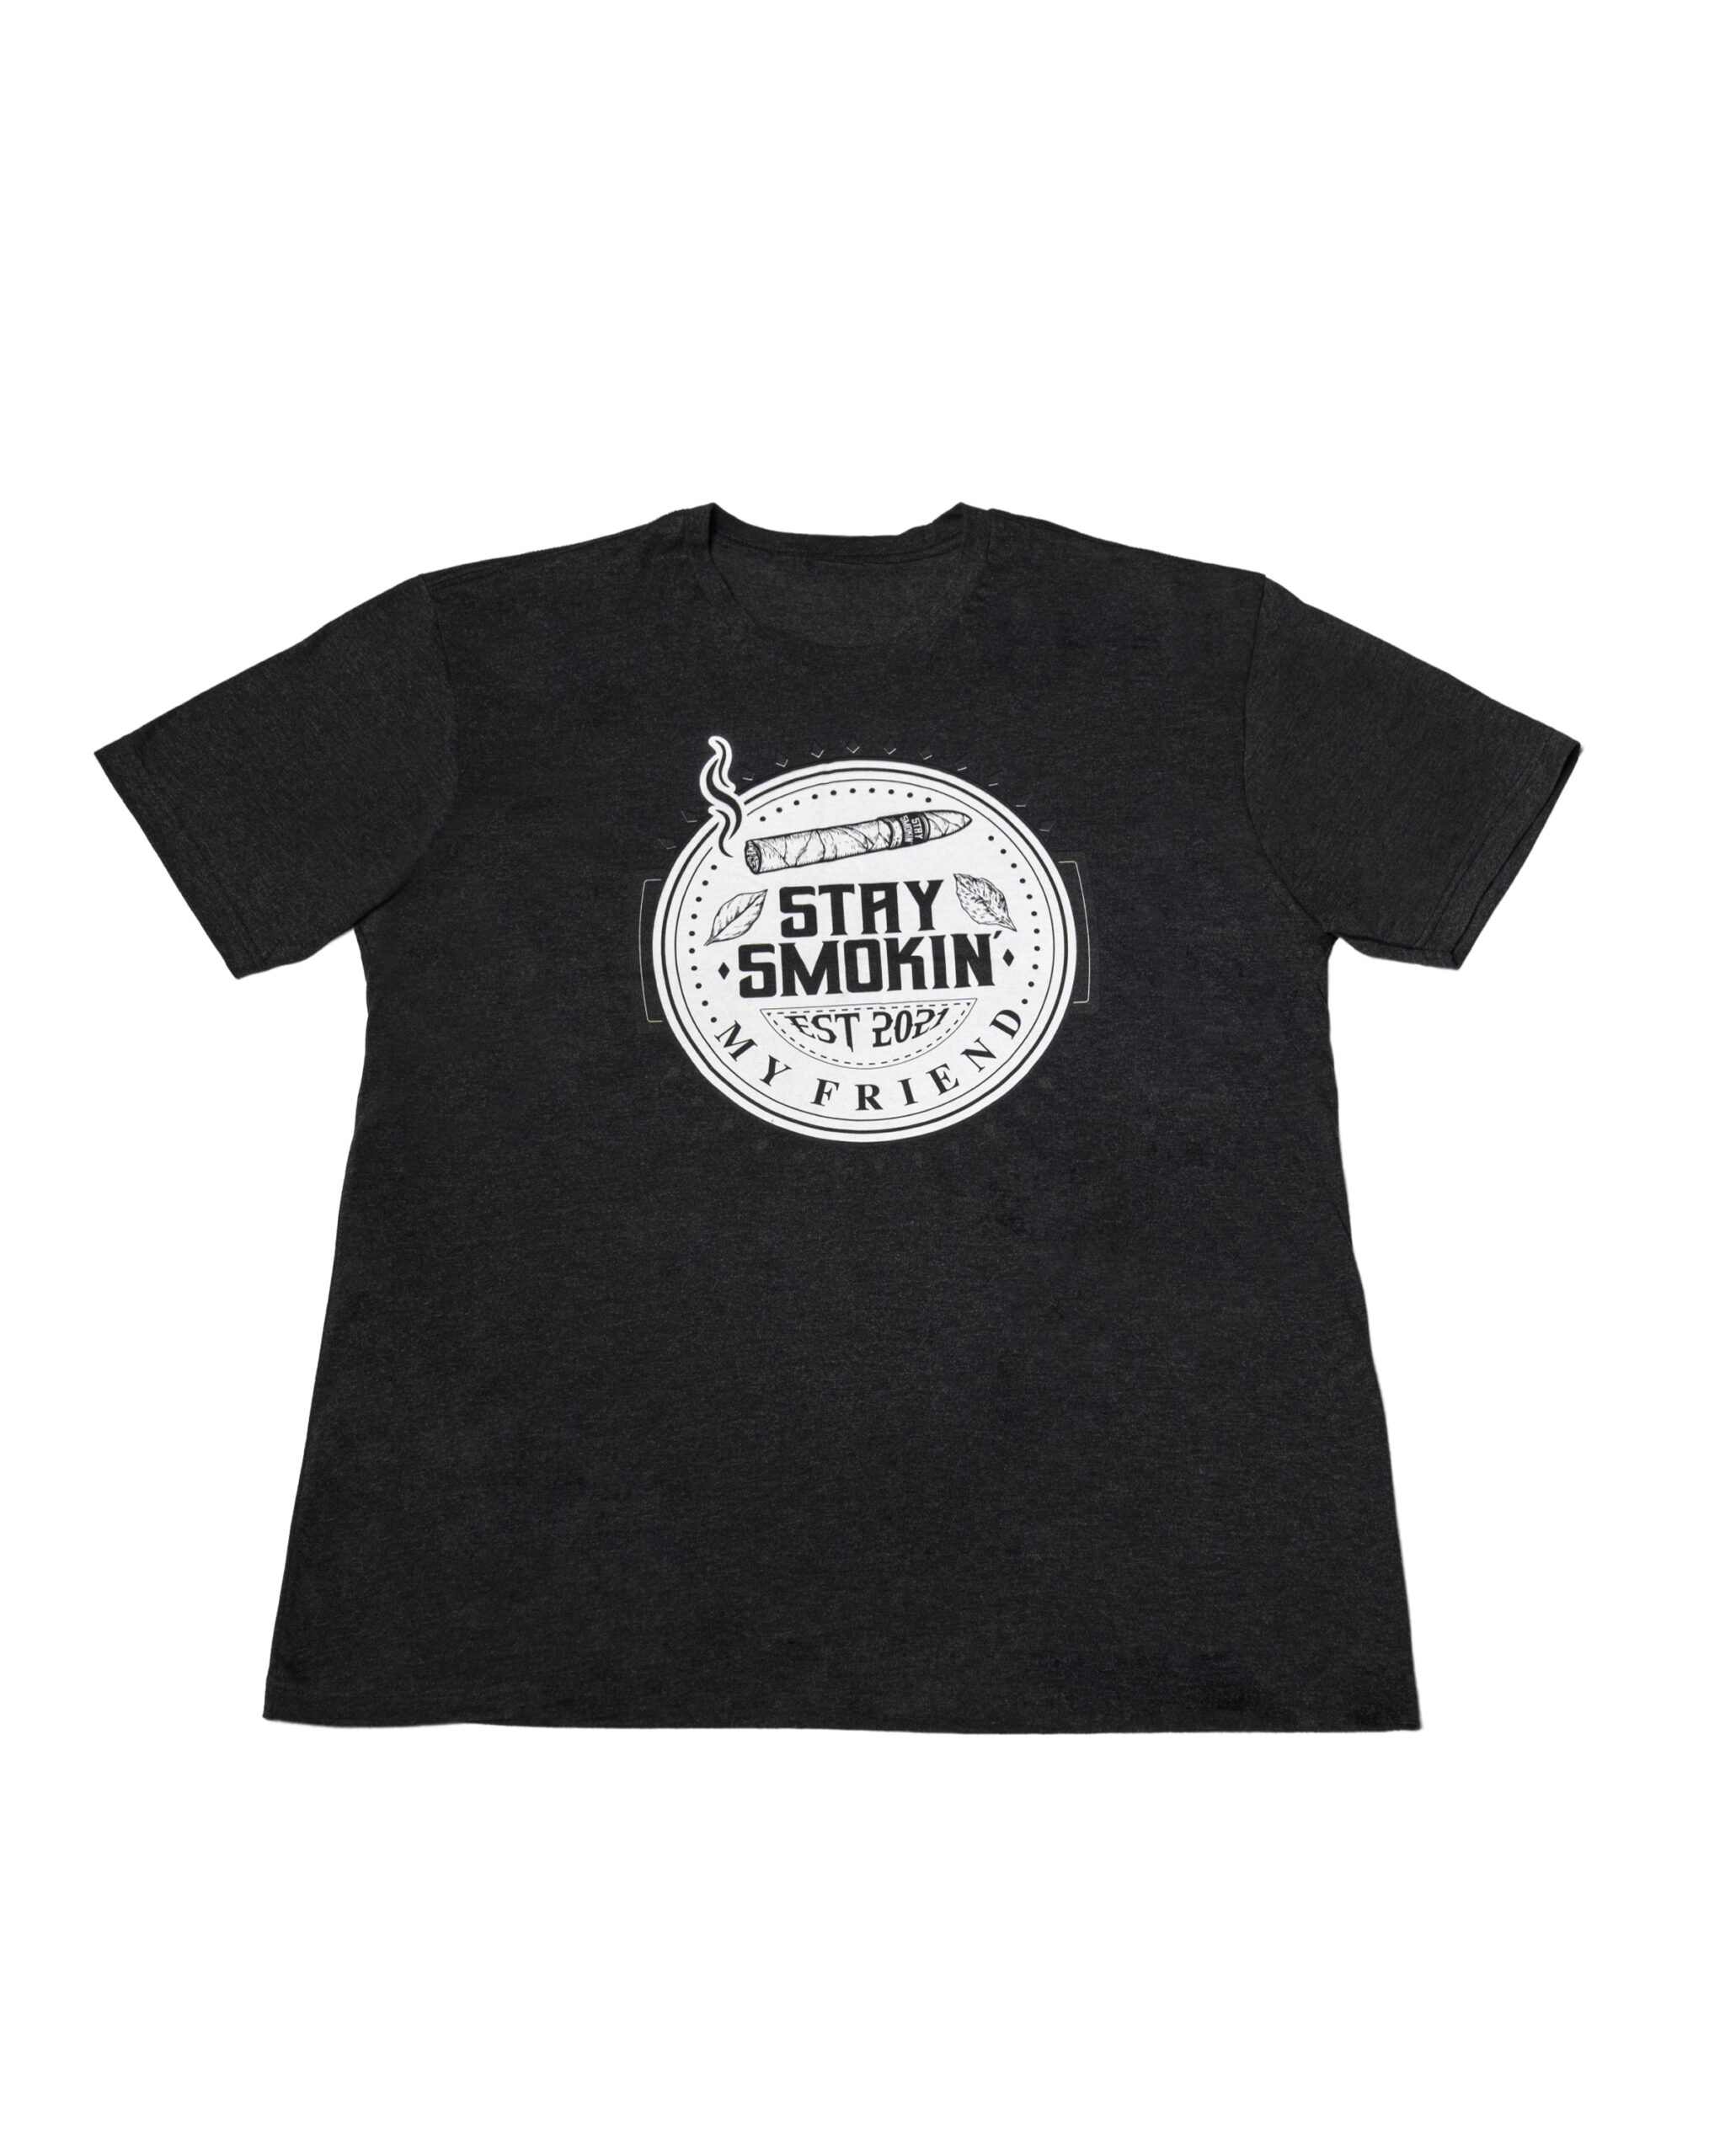 Vintage Black T-Shirt with logo